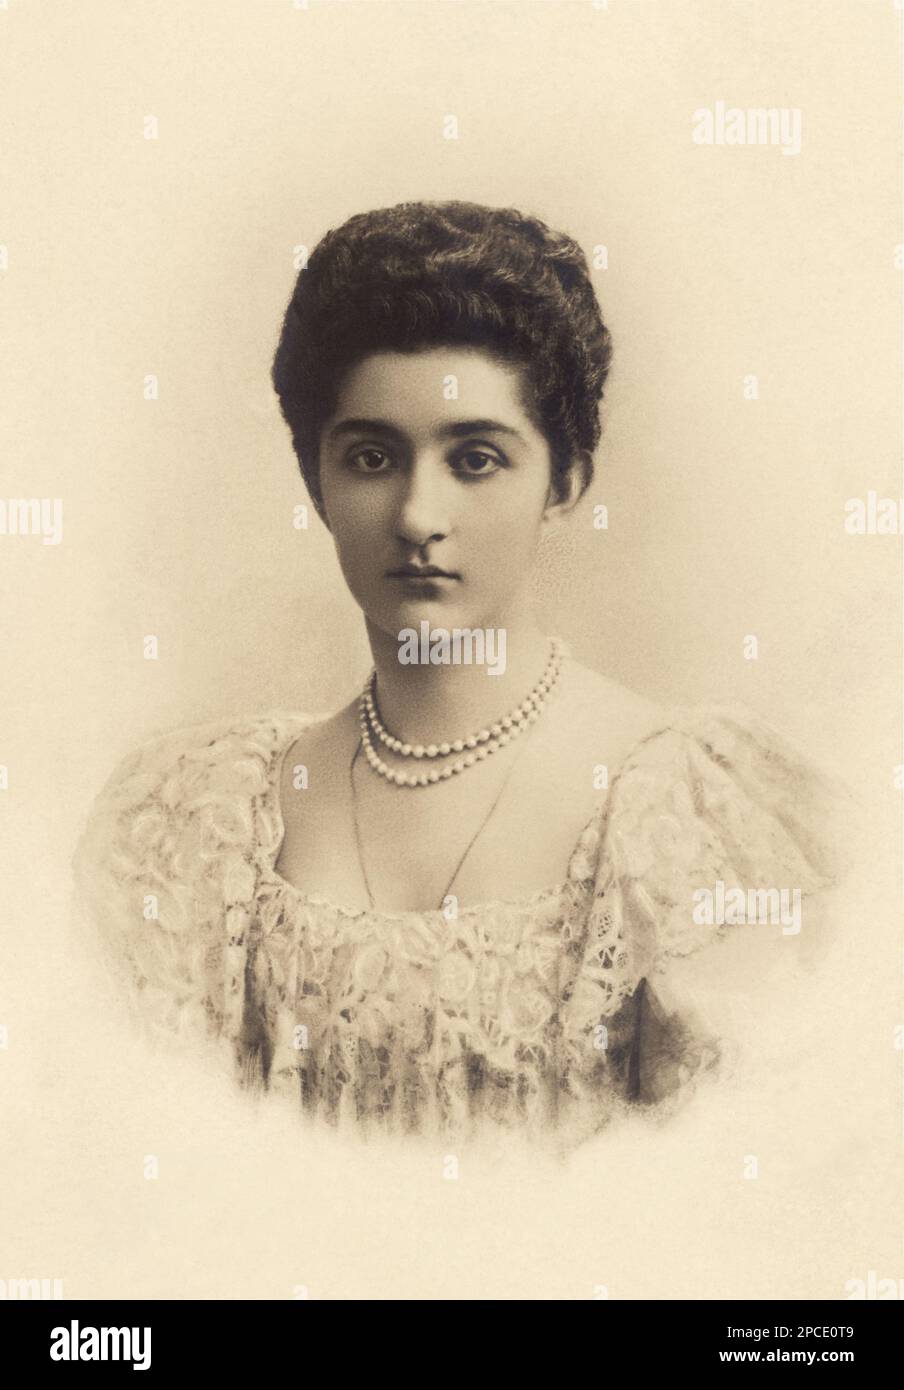 Ca. 1900 , ITALIEN : die Königin von Italien ELENA ( Helene von Montenegro , 1873 - 1952 ) Im offiziellen Portrait - CASA SAVOIA - ITALIA - REALI - Nobiltà ITALIANA - ADEL - KÖNIGSFAMILIE - GESCHICHTE - FOTOSTORICHE - gioiello - gioielli - Juwelen - Schmuck - collana di perle - Perlenkette - Halskette - Dekolleté - pizzo - Spitze - BELLE EPOQUE - Chignon - Archivio GBB Stockfoto